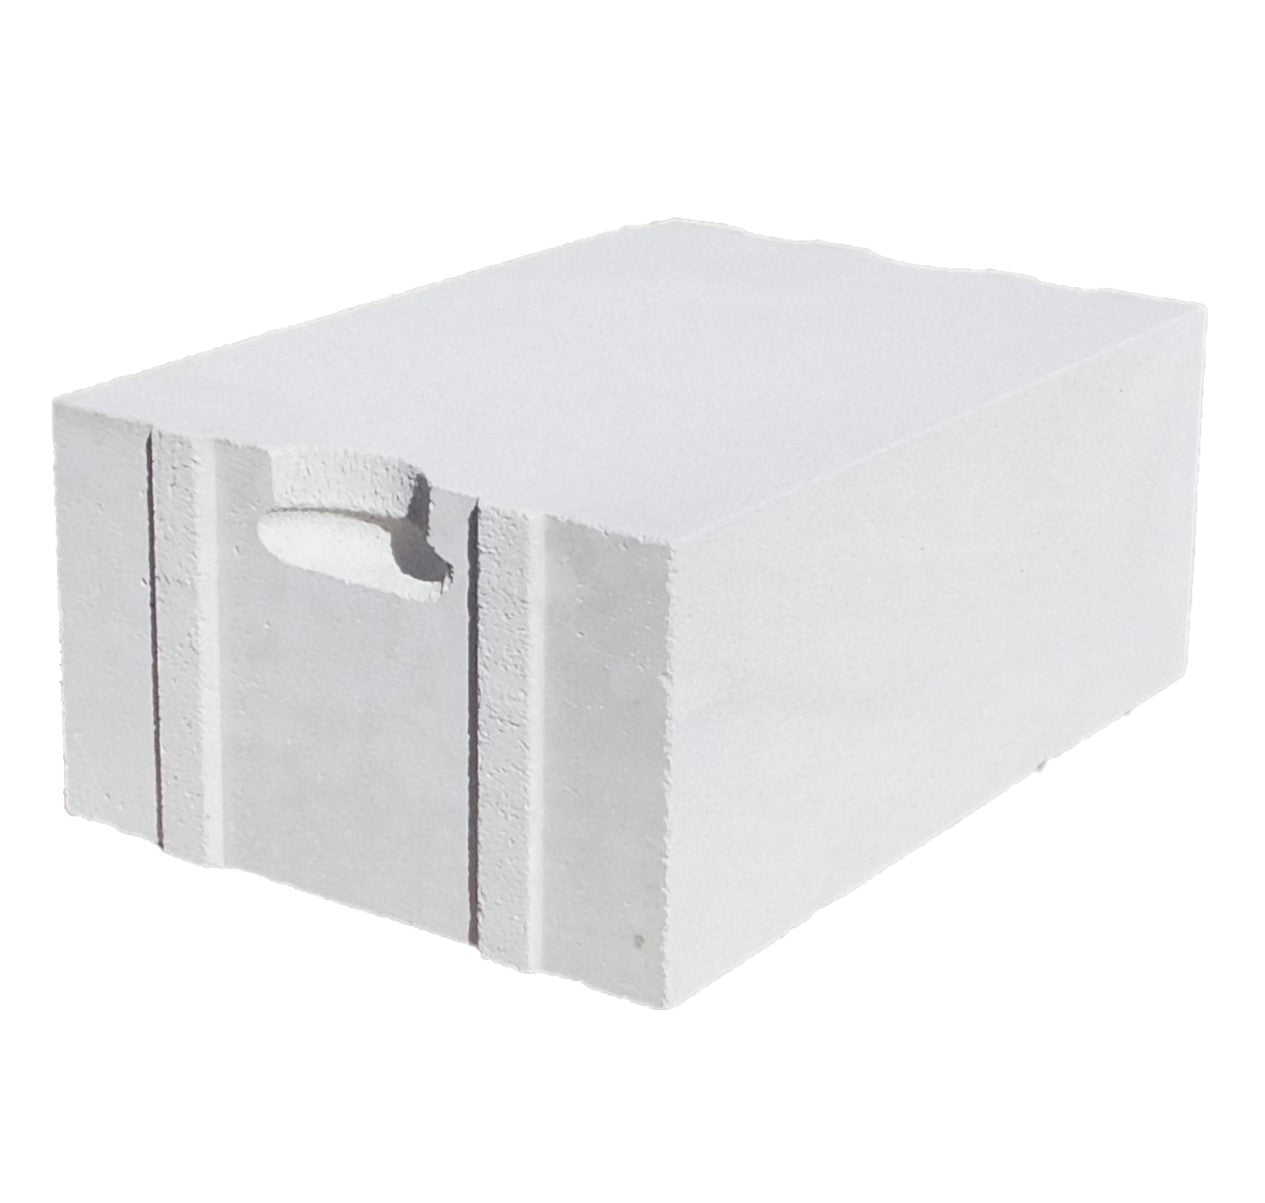 Aerated concrete Block G4 500x250x300mm (pallet)